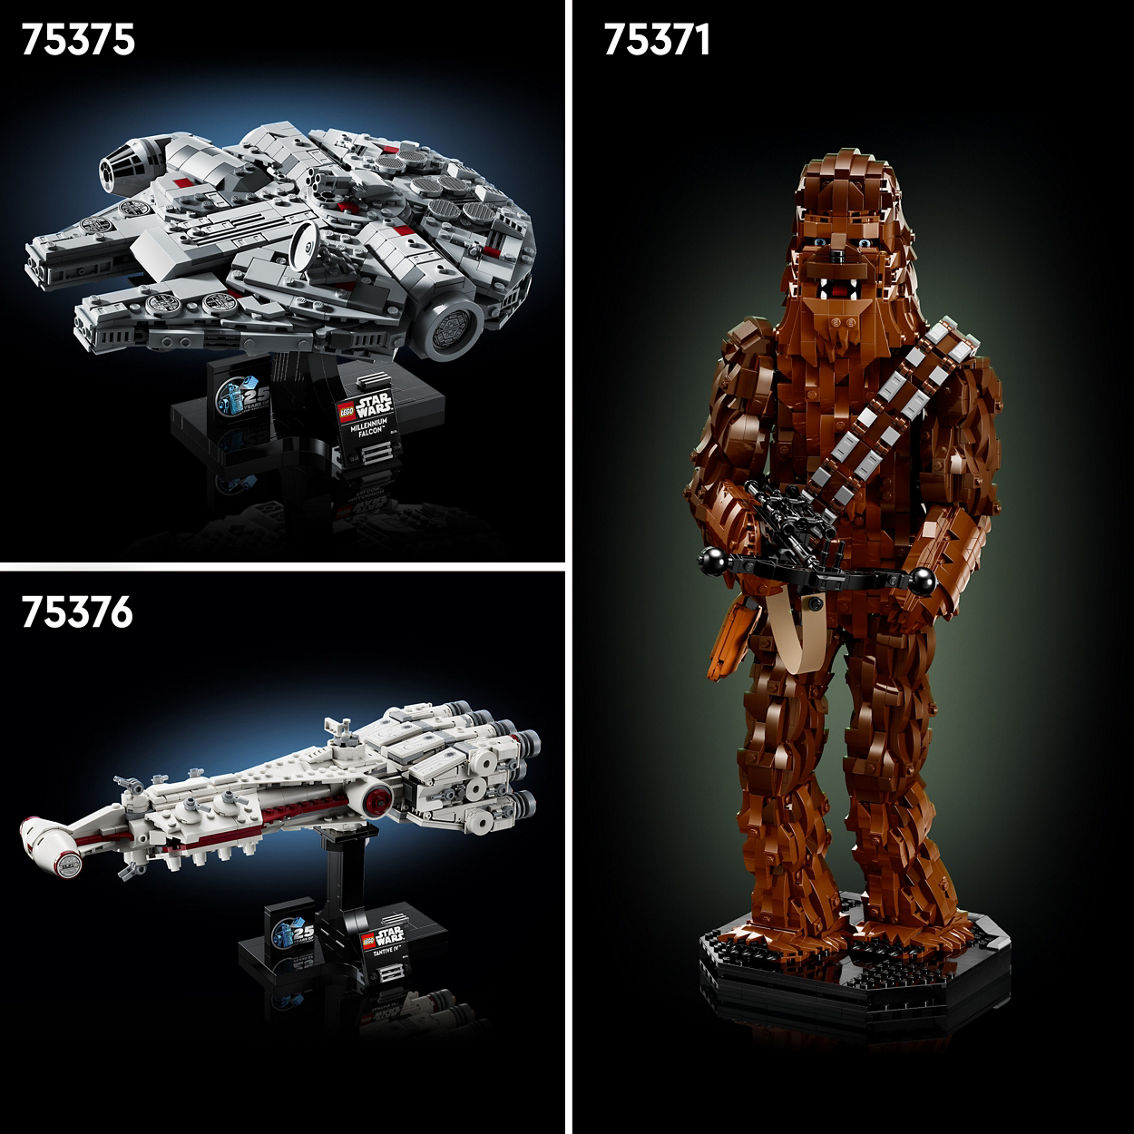 LEGO Star Wars Tantive IV 75376 - Image 6 of 9